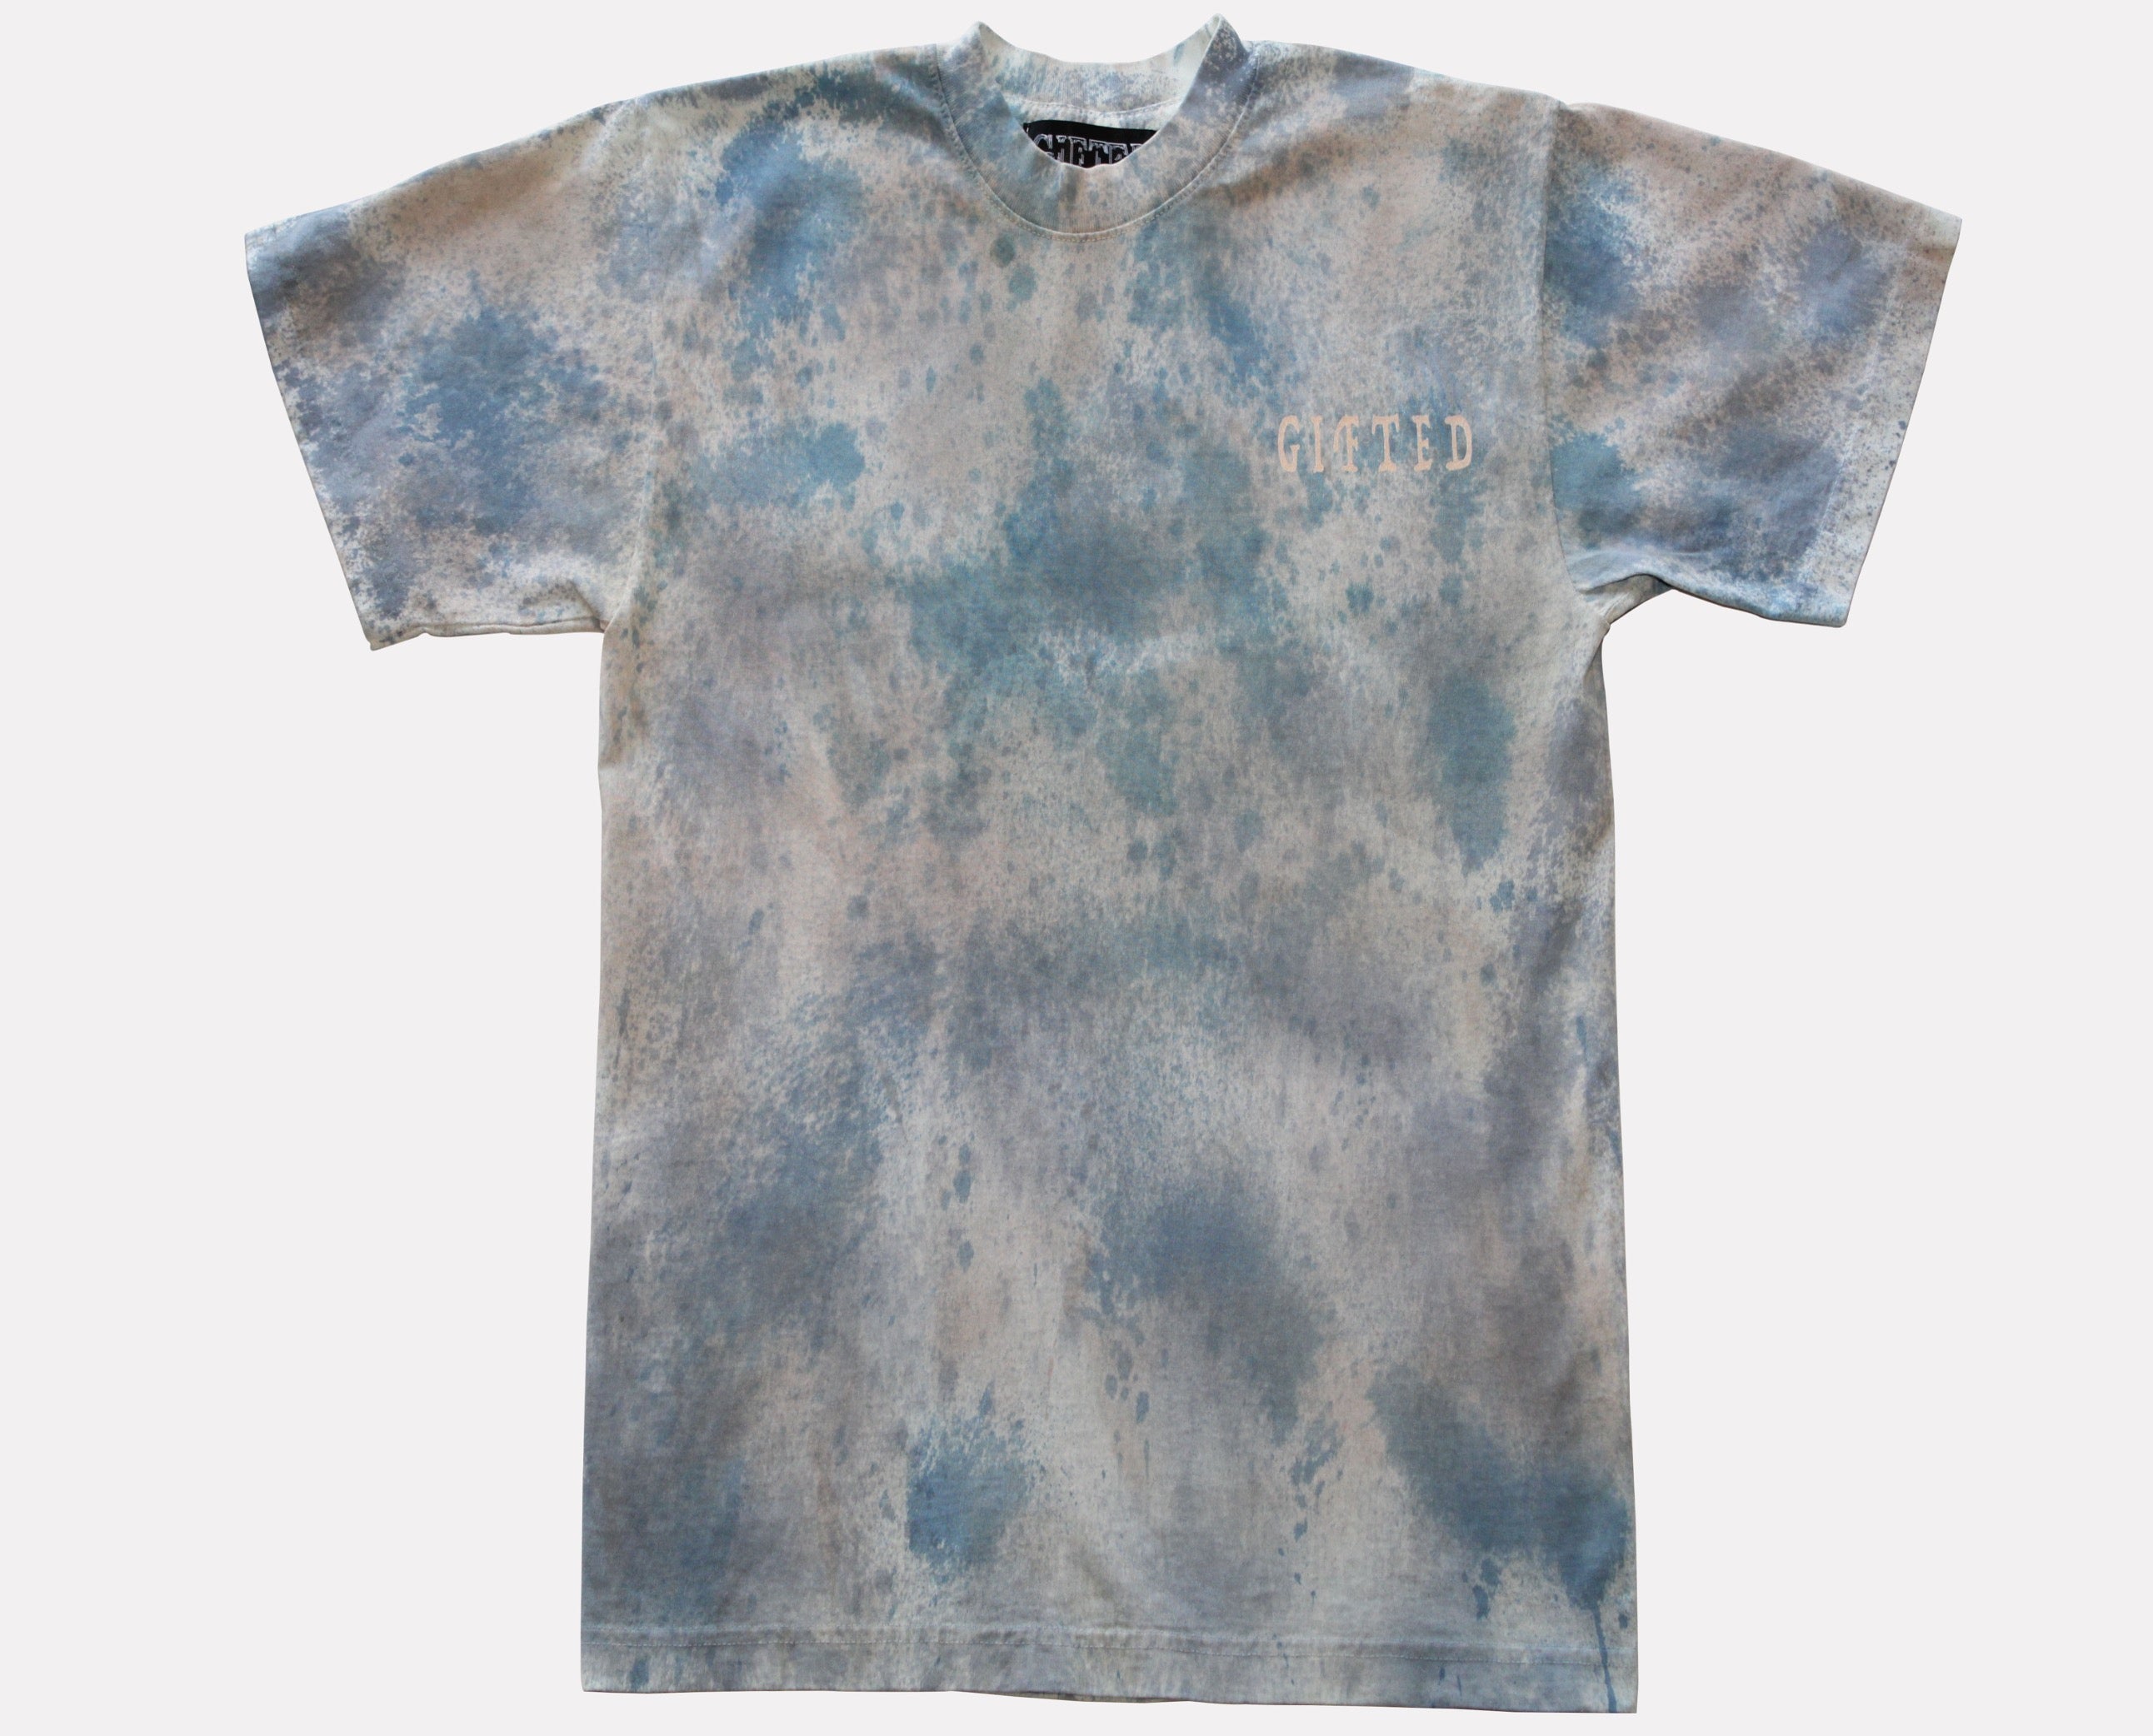 "SunKissd" Dye T-Shirt